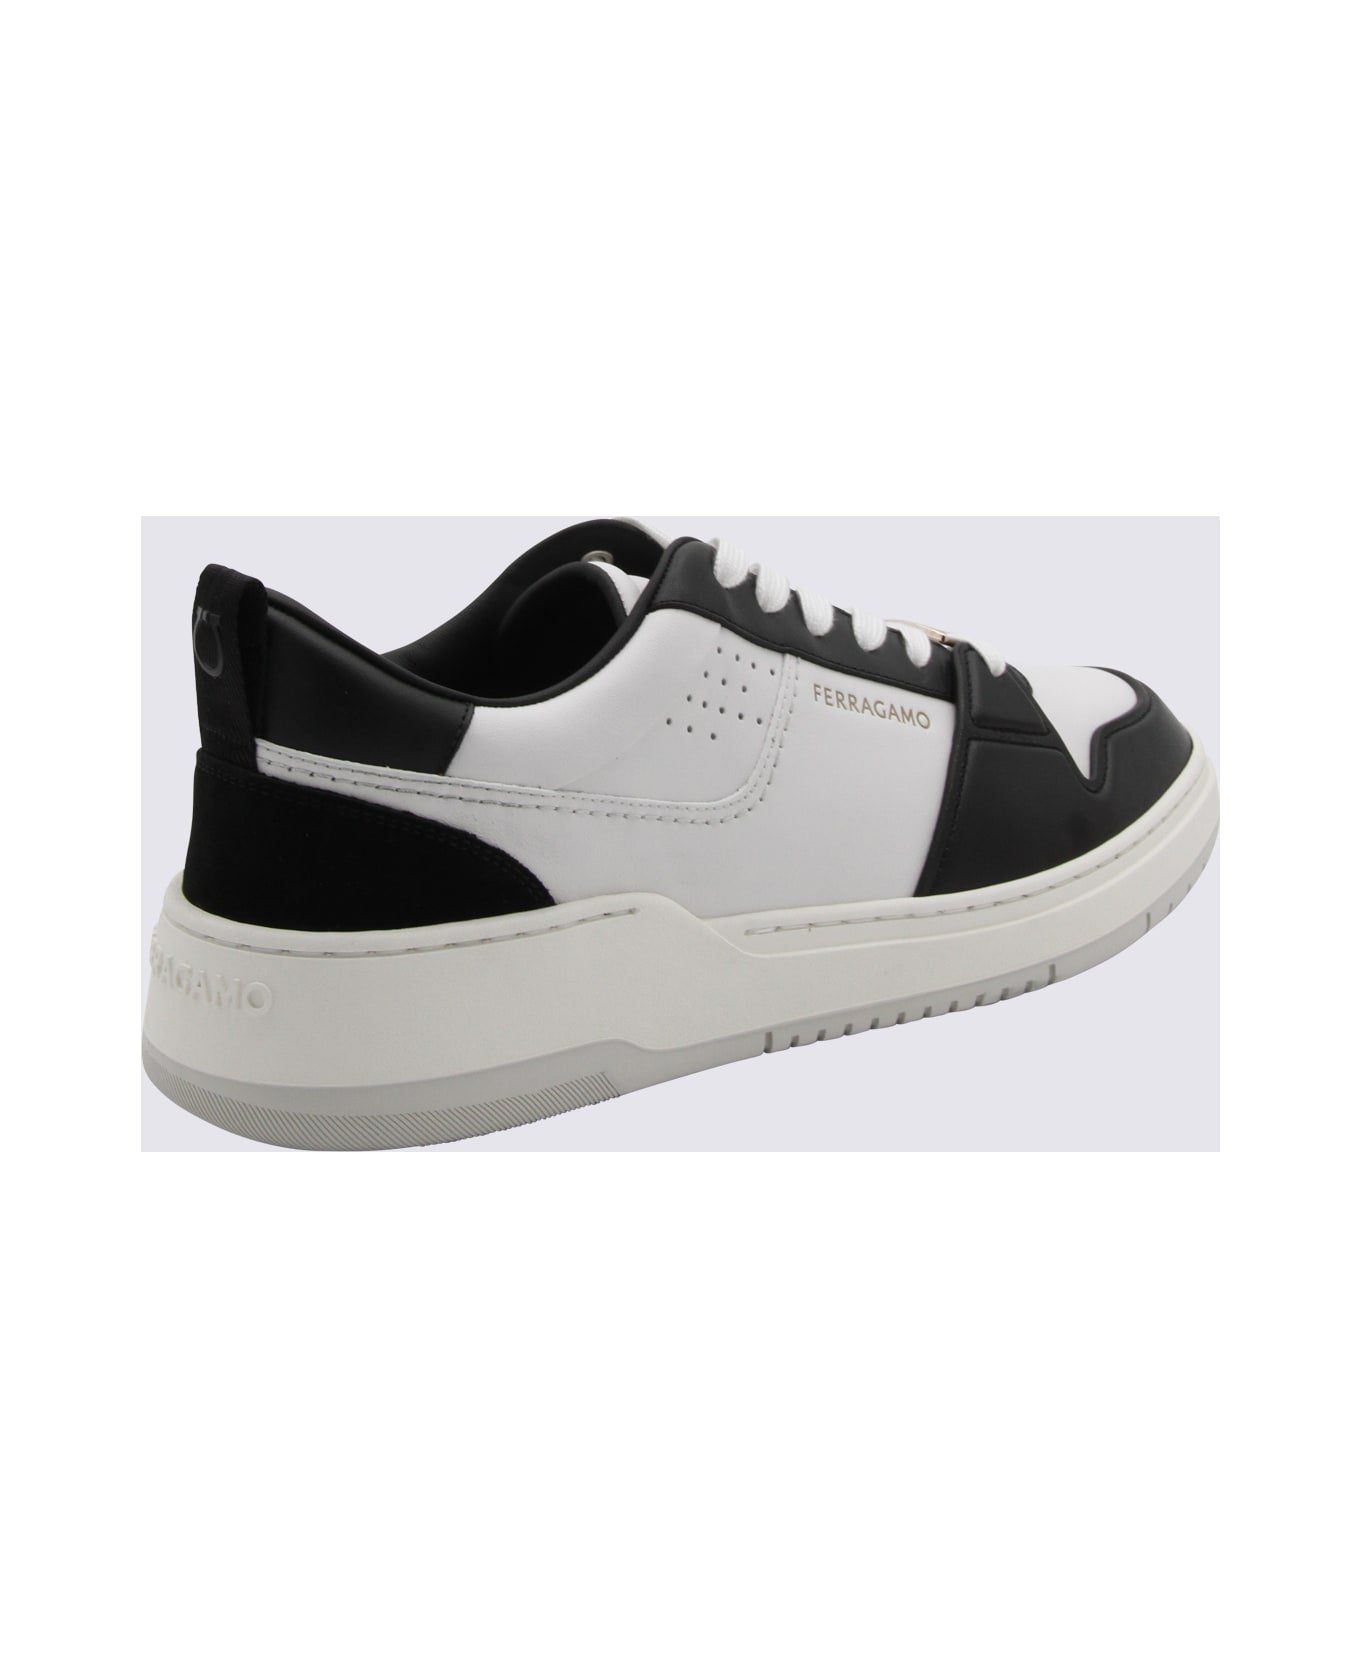 Ferragamo White And Black Leather Street Style Pain Logo Sneakers - White スニーカー